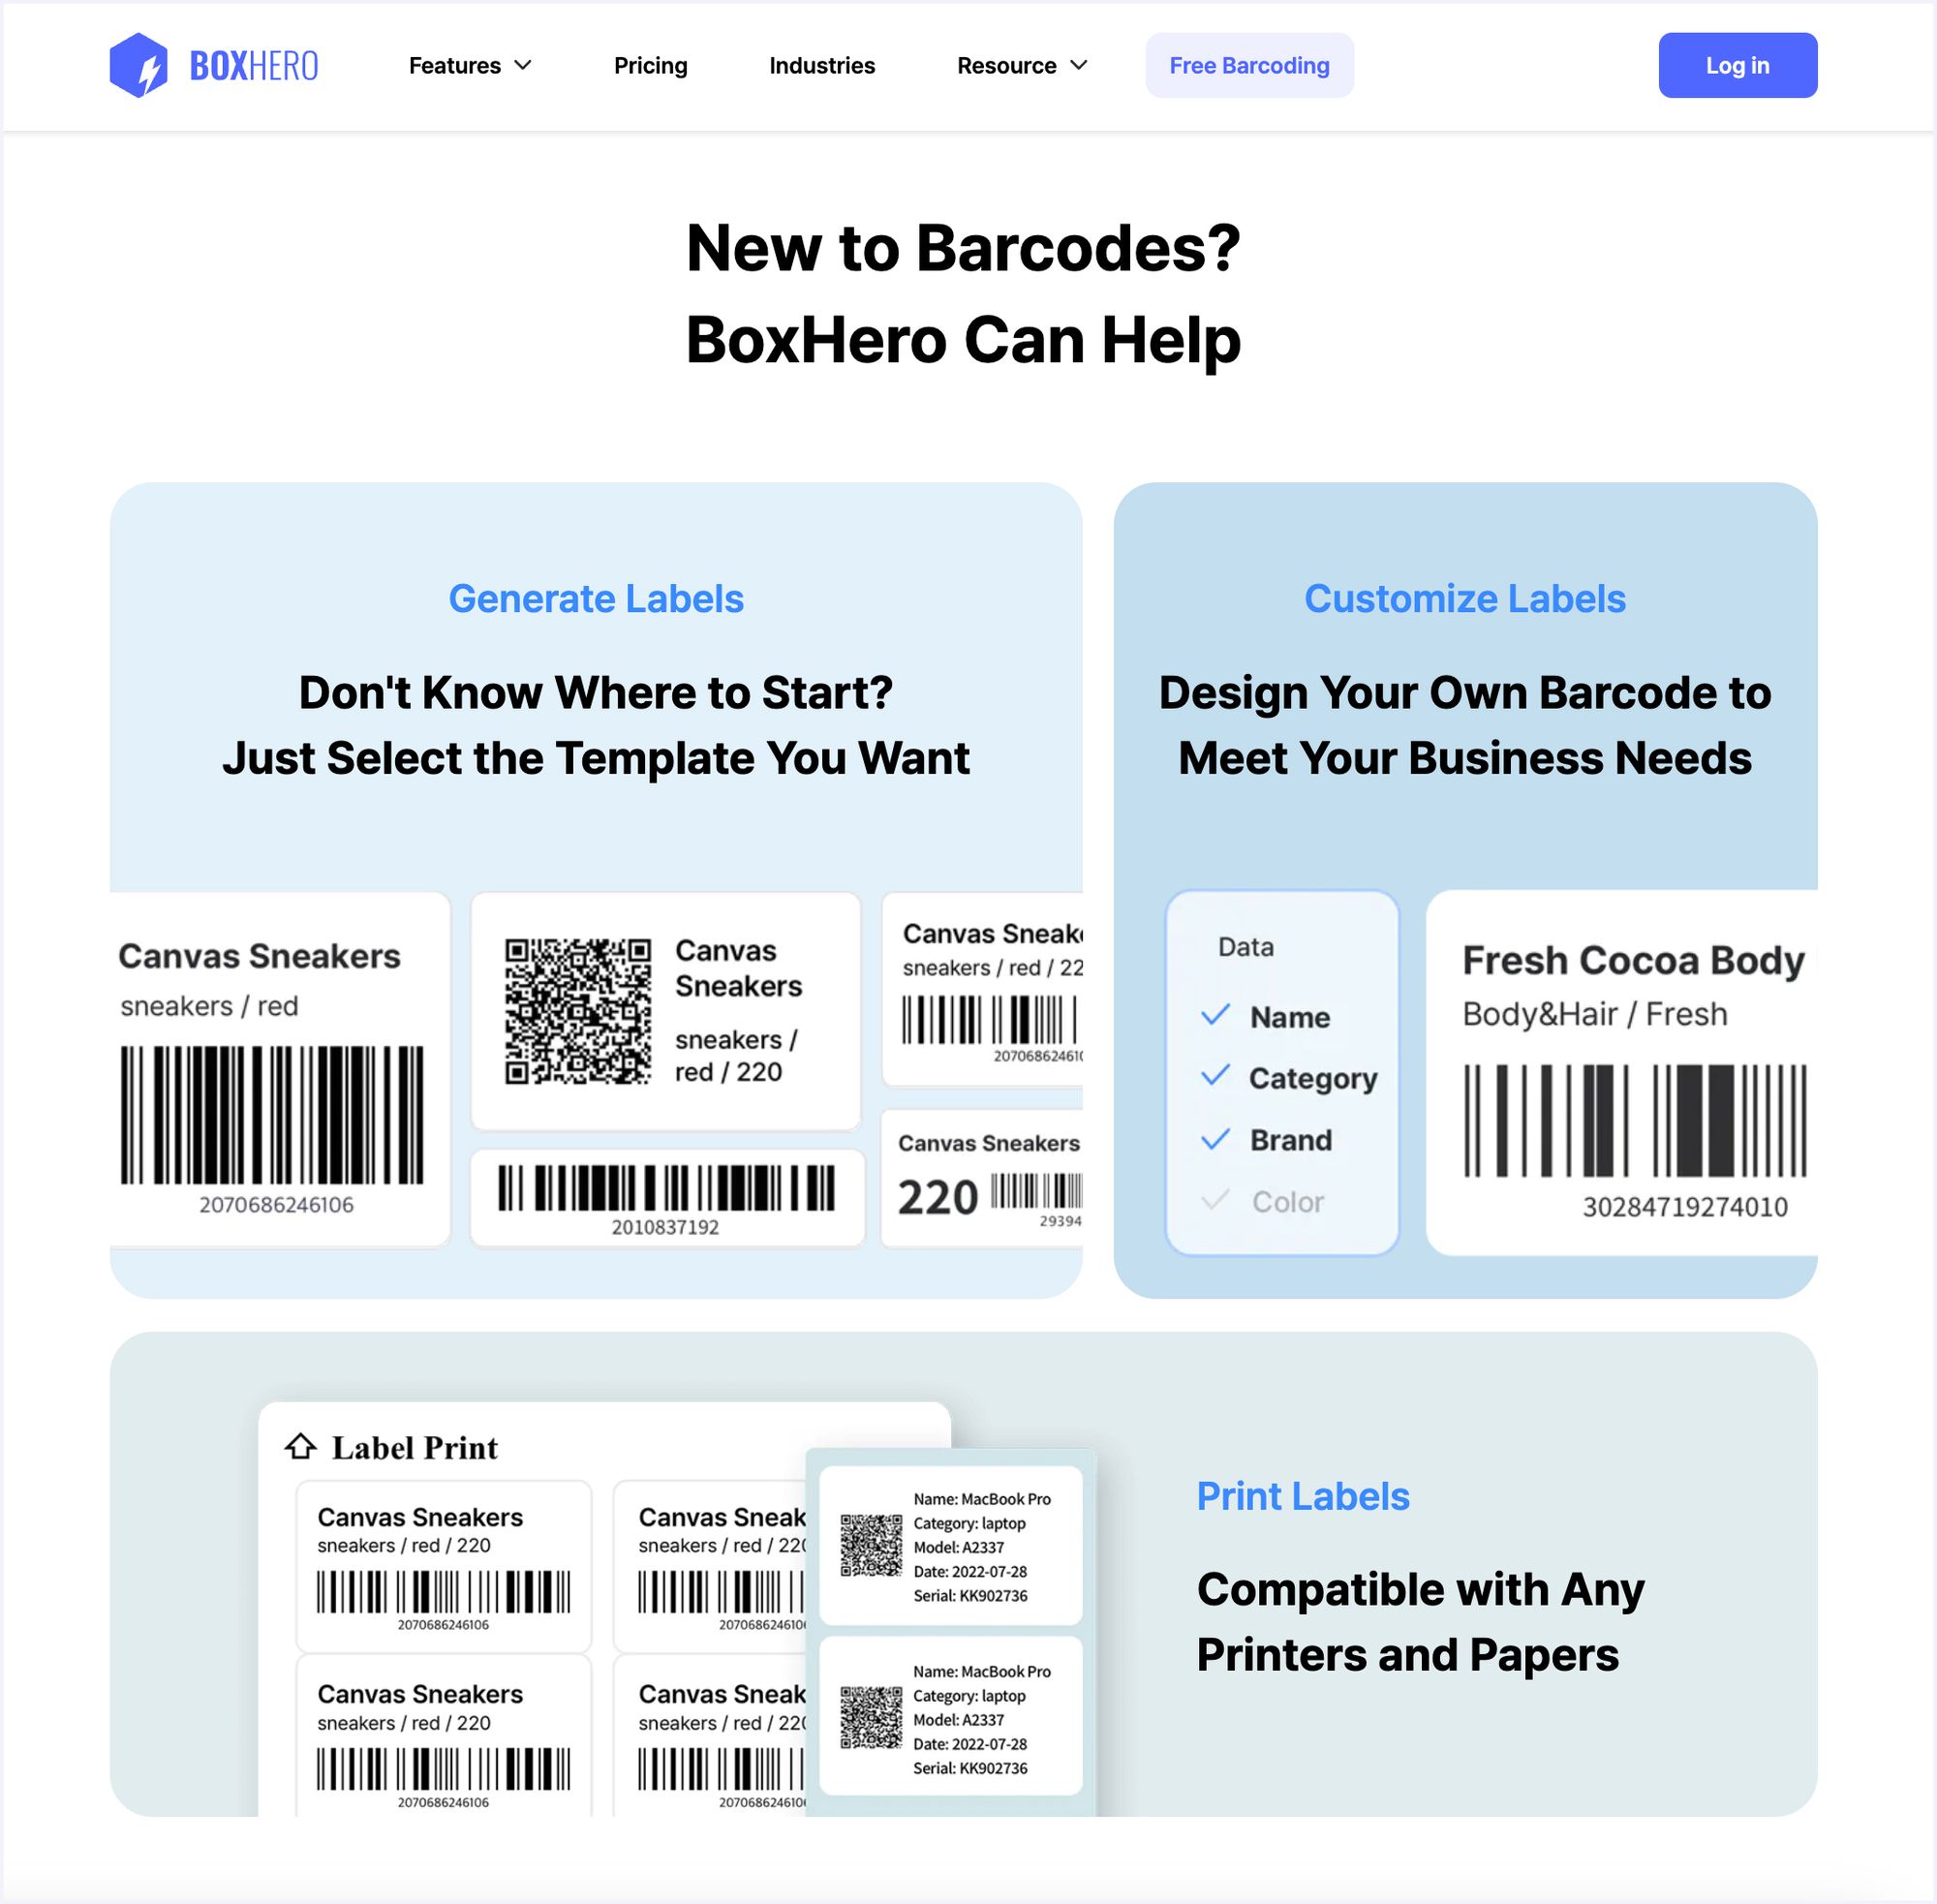 BoxHero's free barcoding feature.